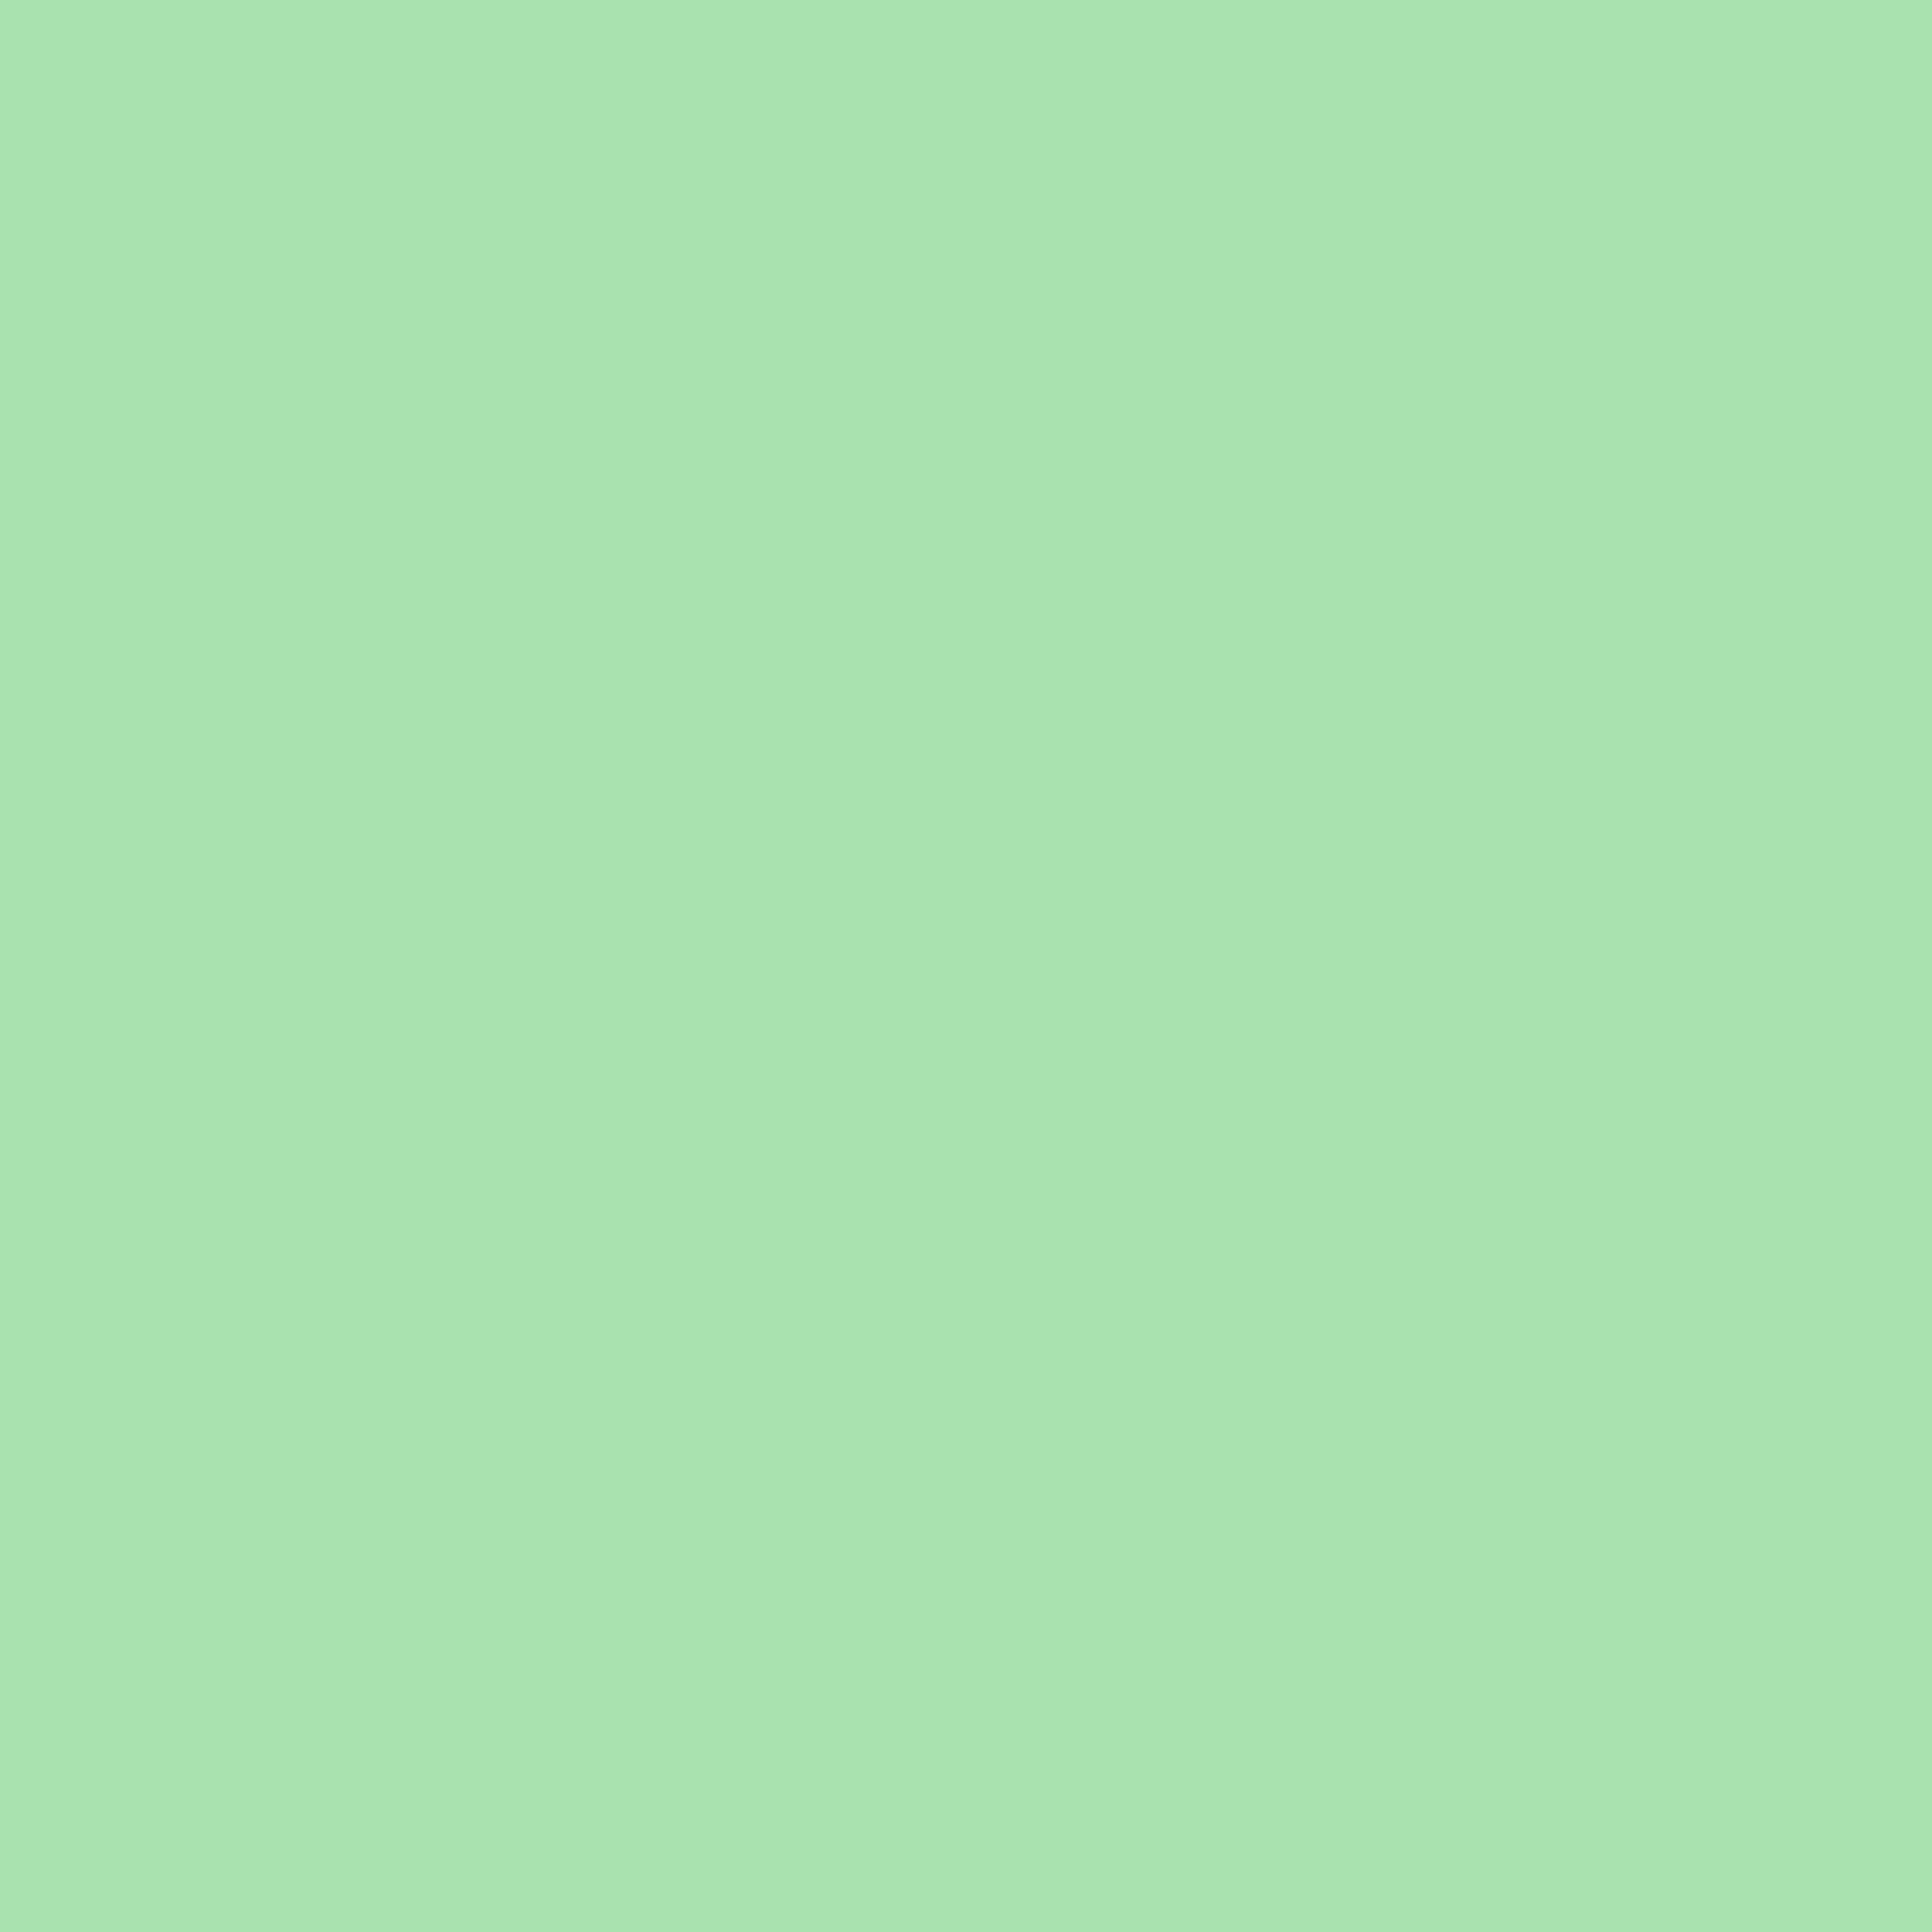 2732x2732 Celadon Solid Color Background